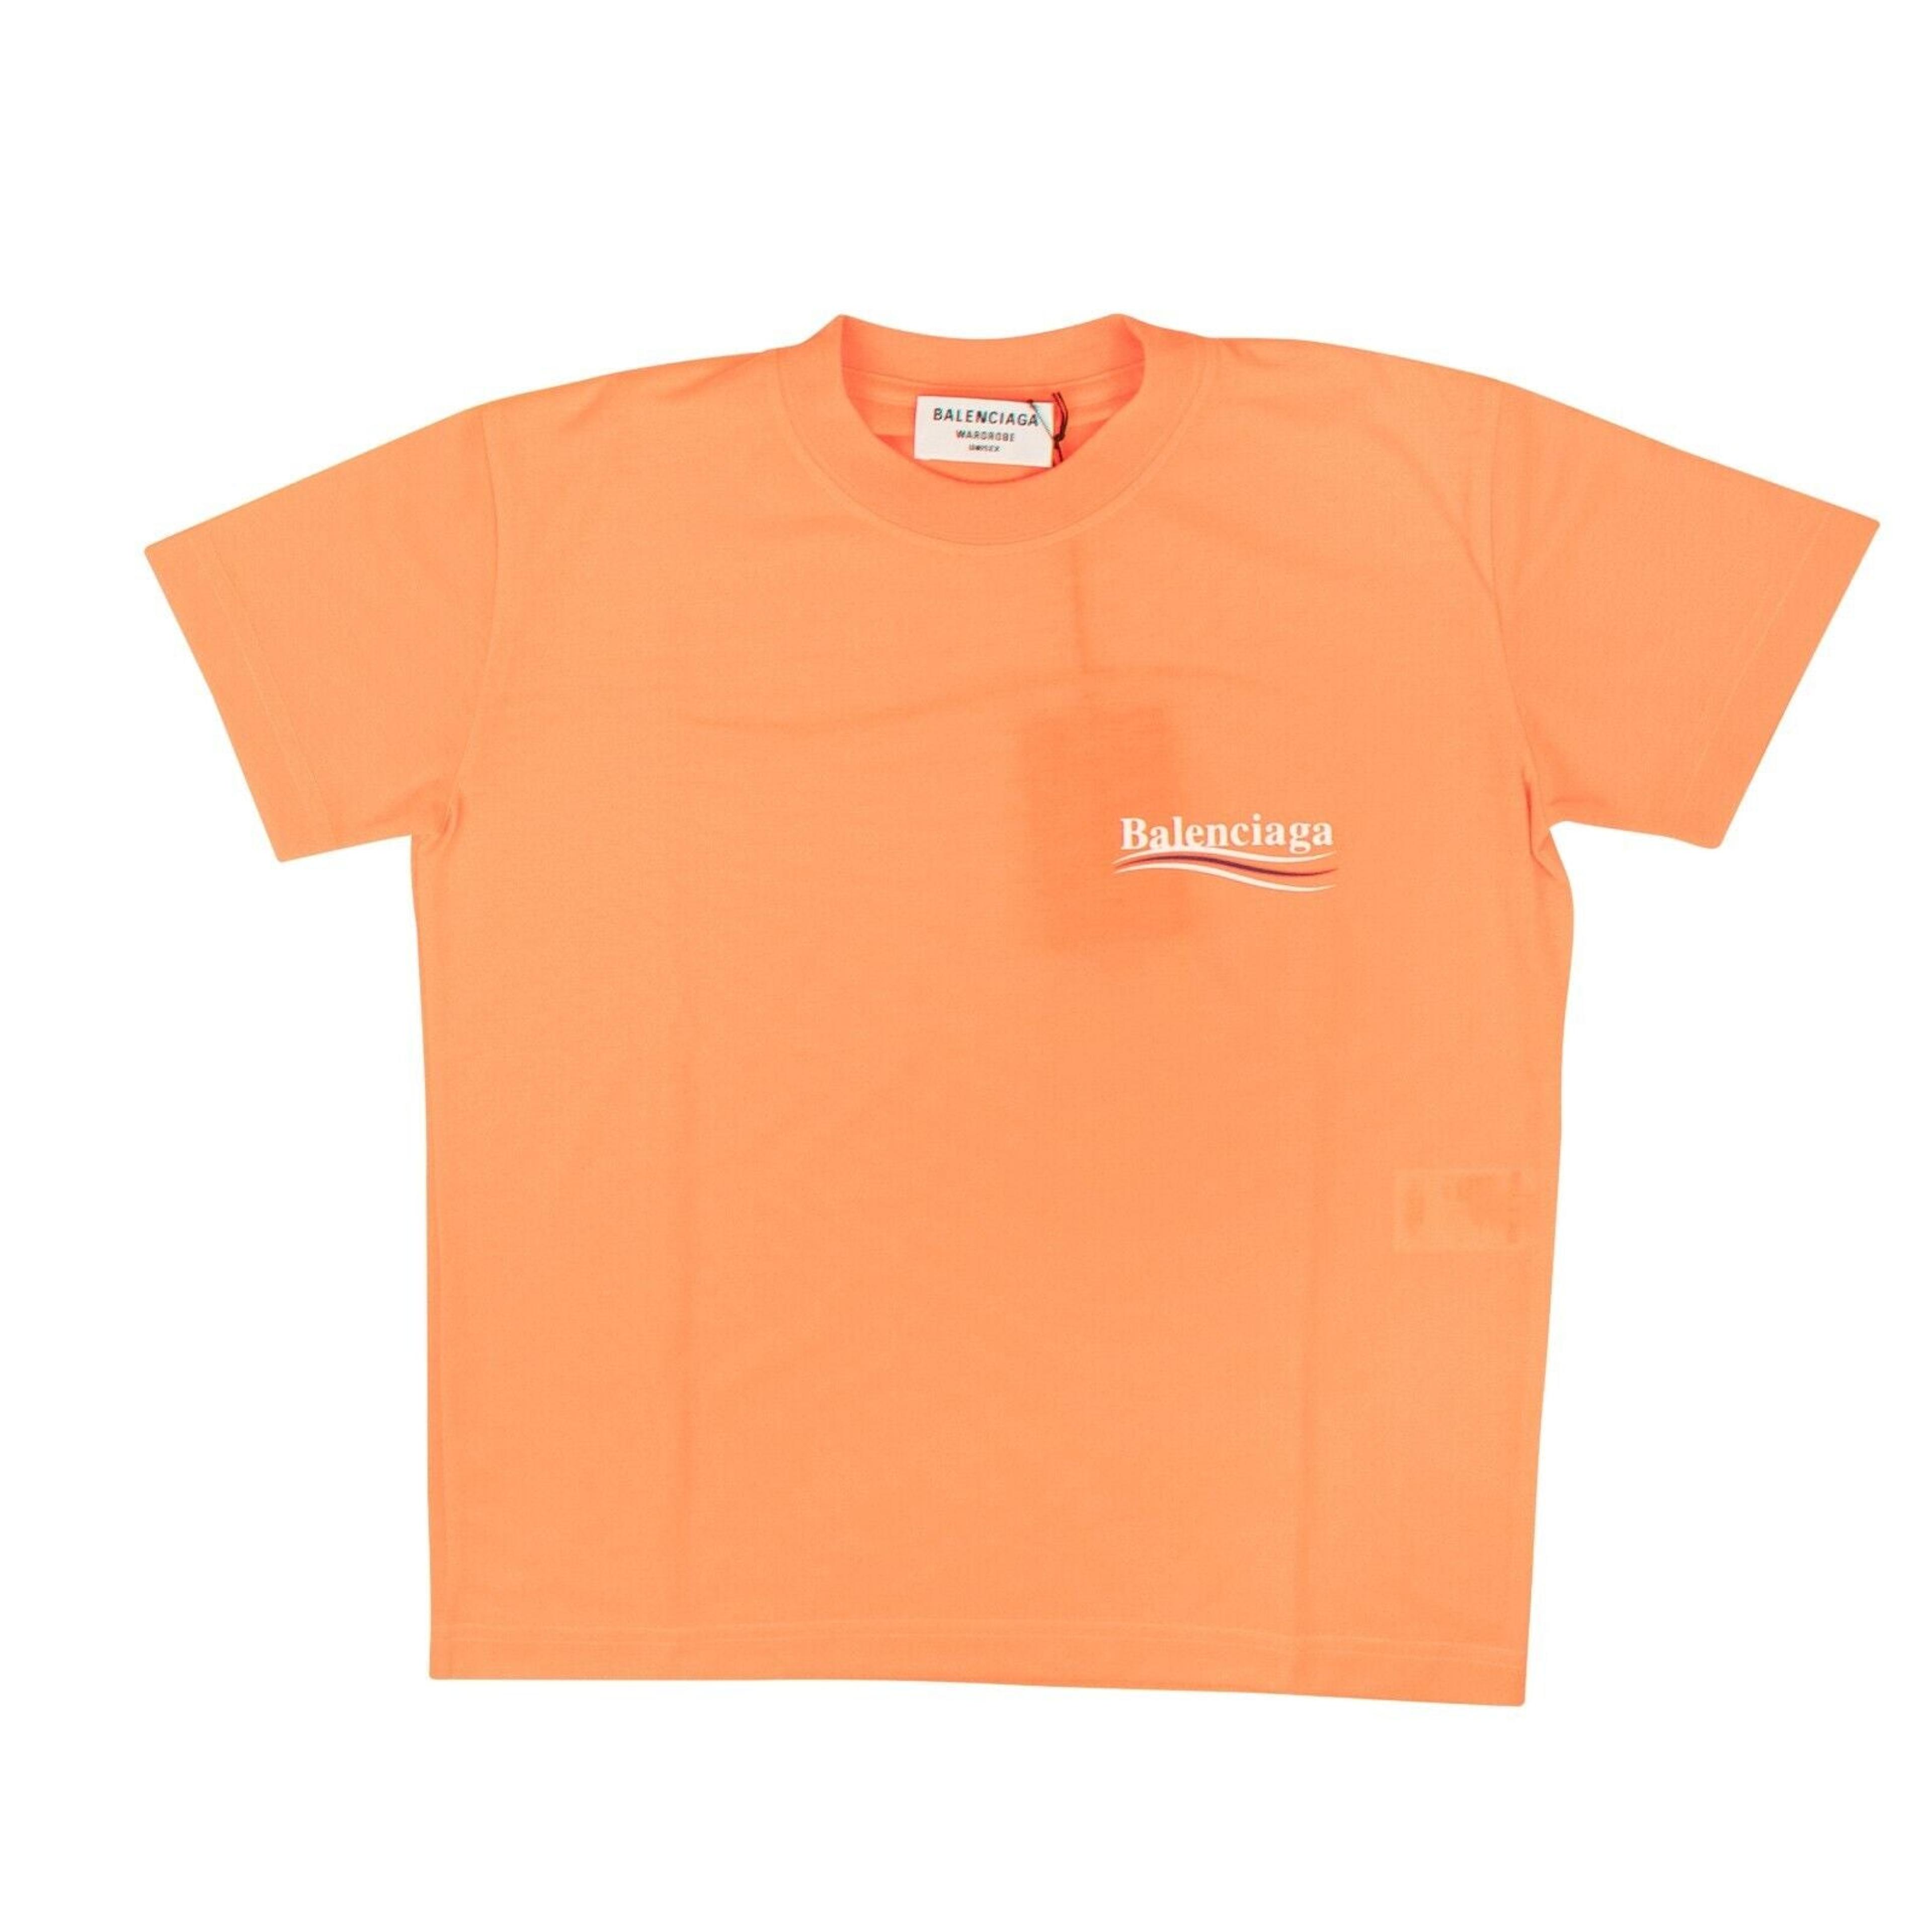 Alternate View 1 of Balenciaga Political Campaign T-Shirt - Orange